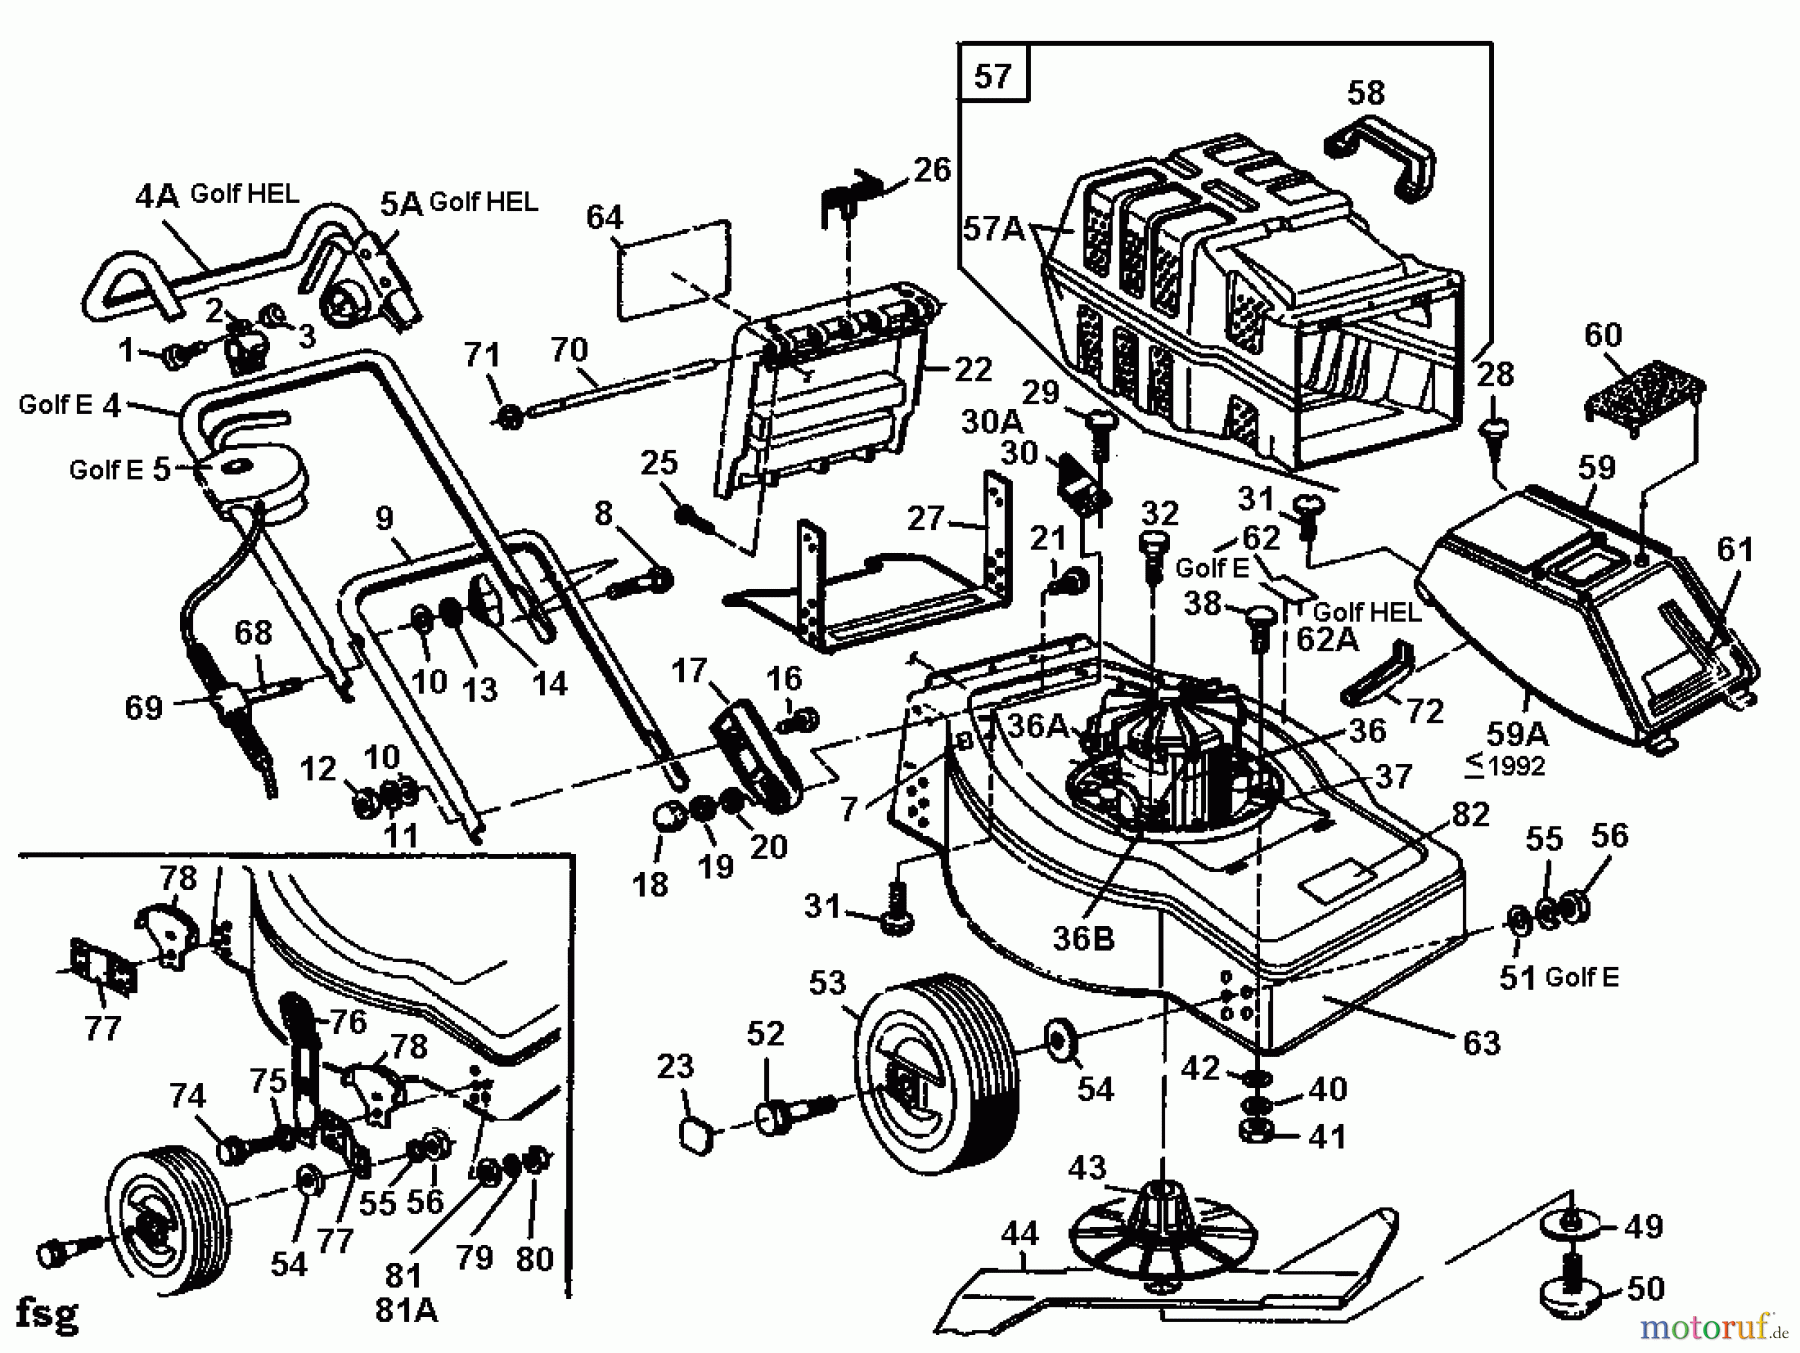  Golf Electric mower E 02881.06  (1993) Basic machine